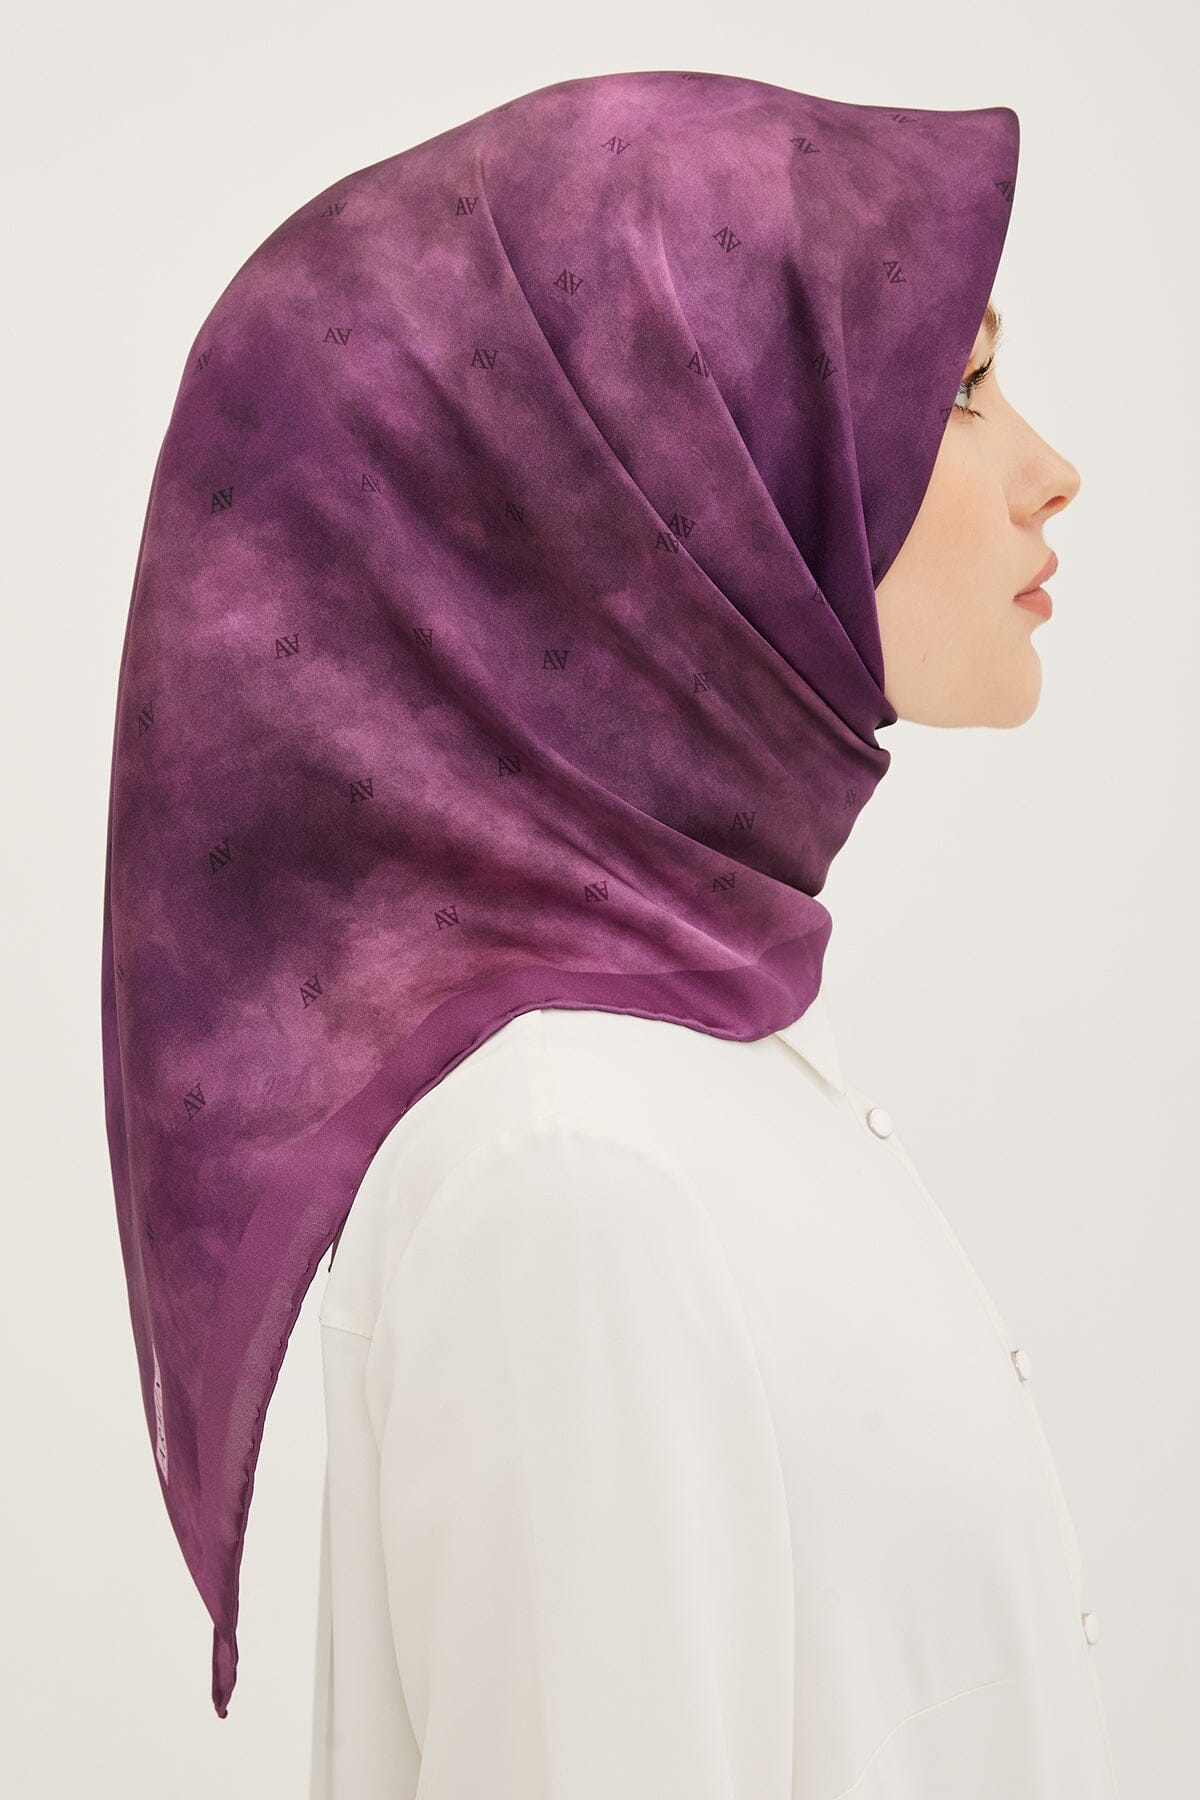 Armine Claudia Silk Twill Scarf #4 Silk Hijabs,Armine Armine 